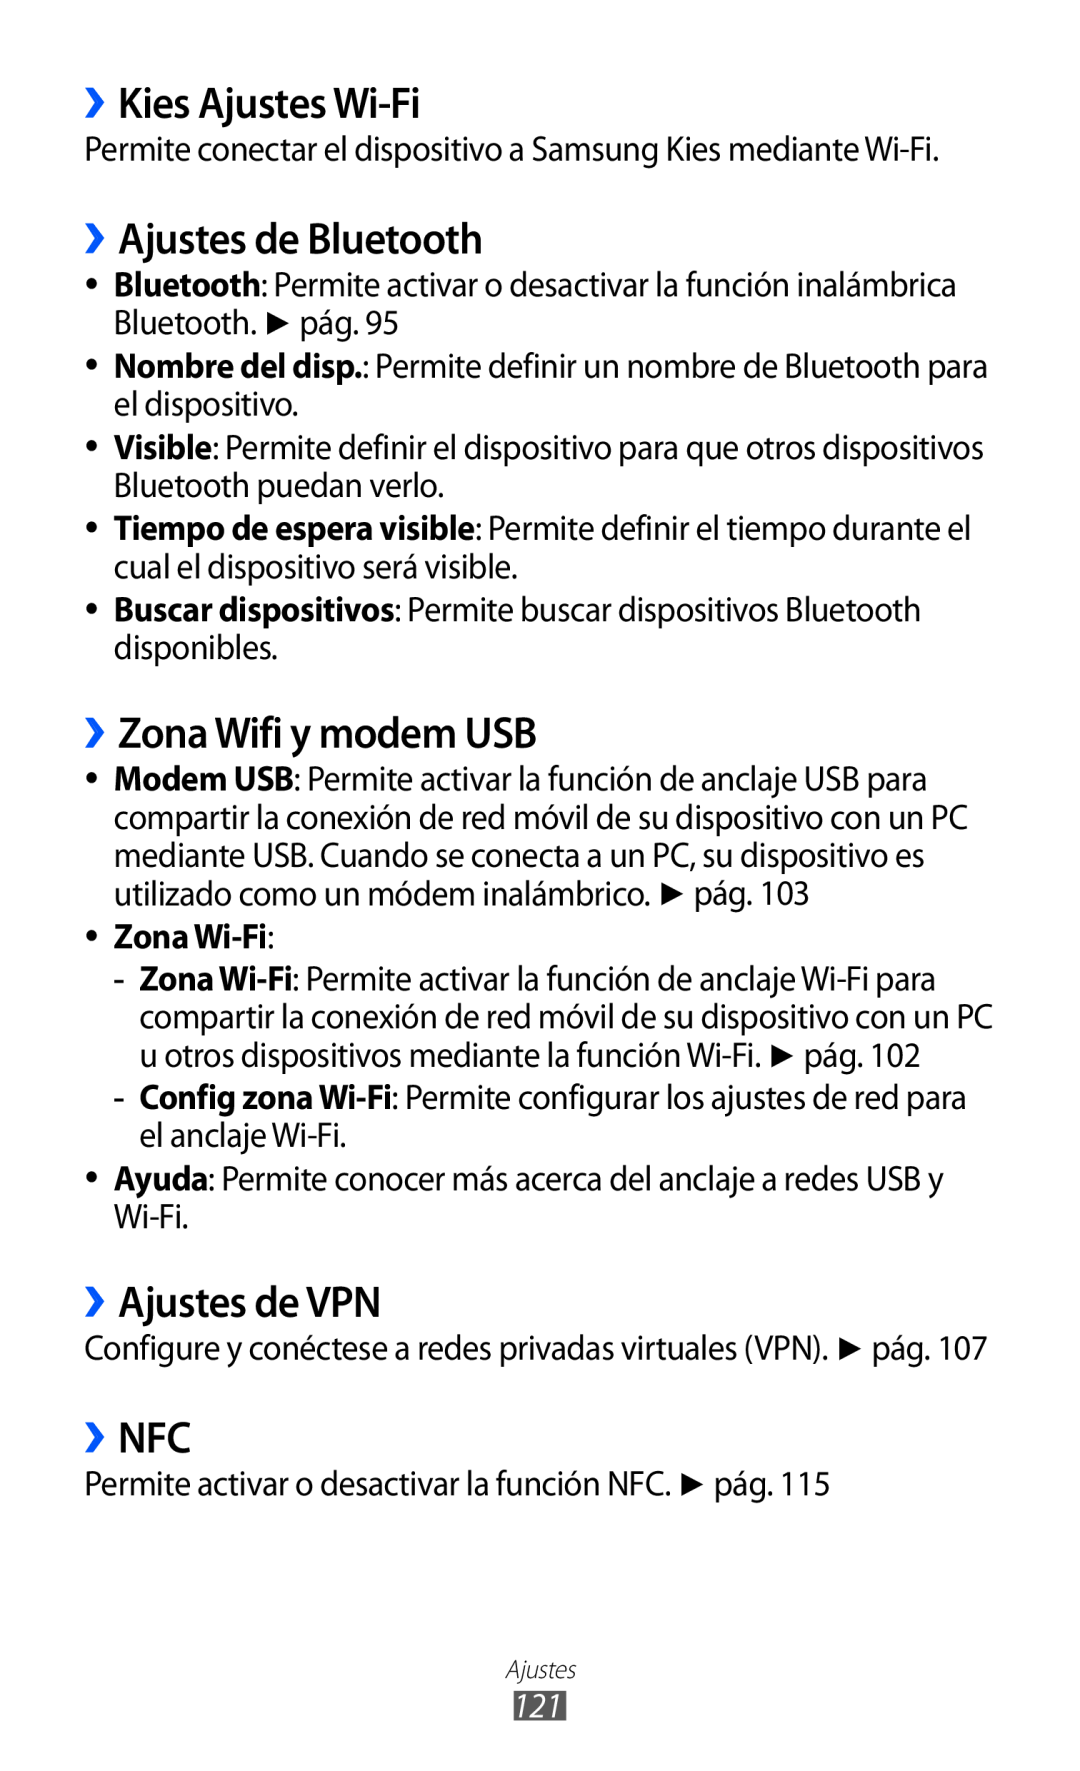 Samsung GT-S6500RWAATL ››Kies Ajustes Wi-Fi, ››Ajustes de Bluetooth, ››Zona Wifi y modem USB, ››Ajustes de VPN, ››Nfc 